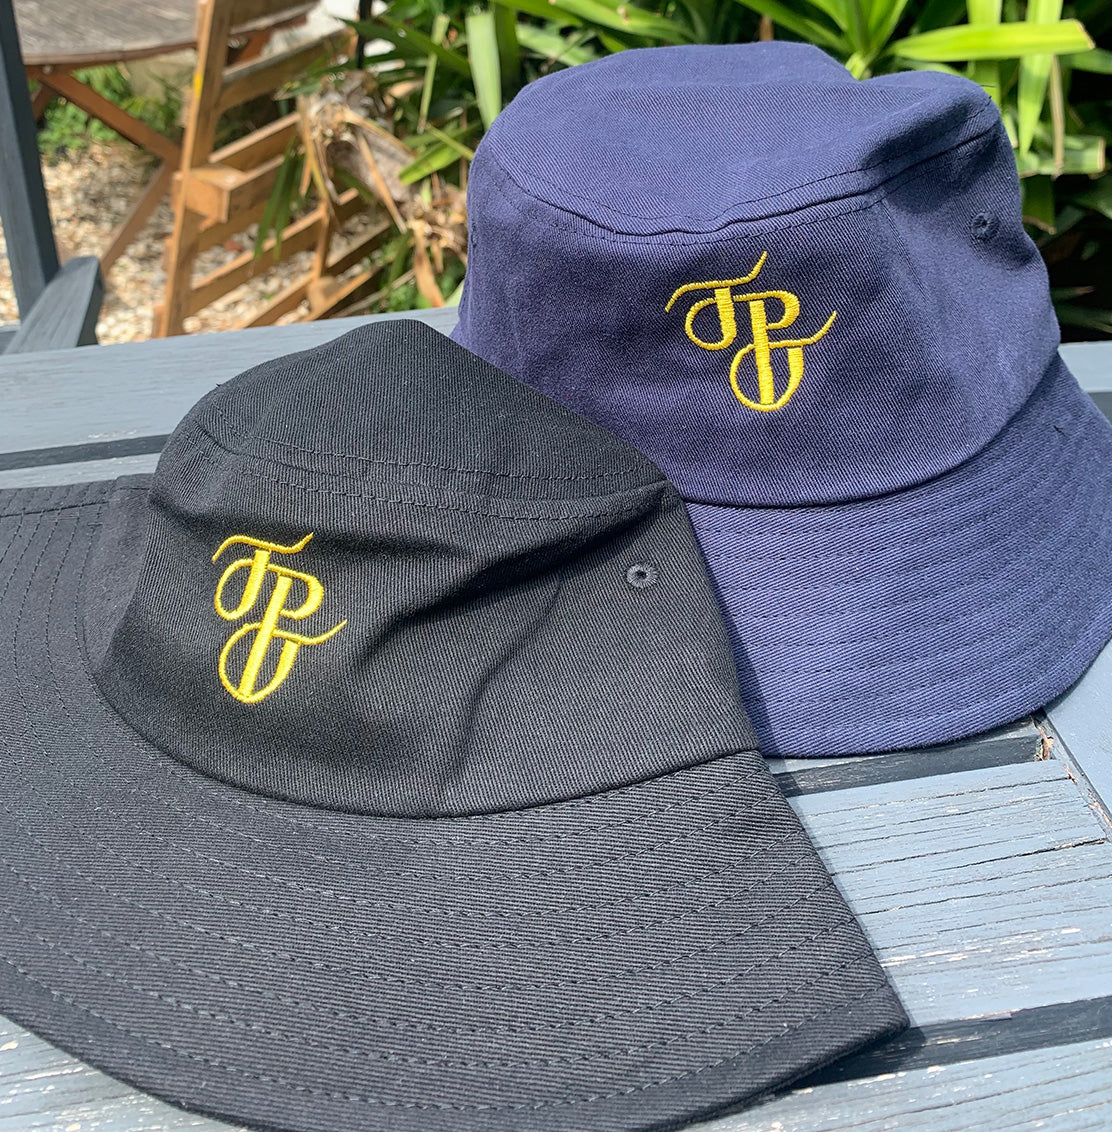 JPJ Bucket Hats